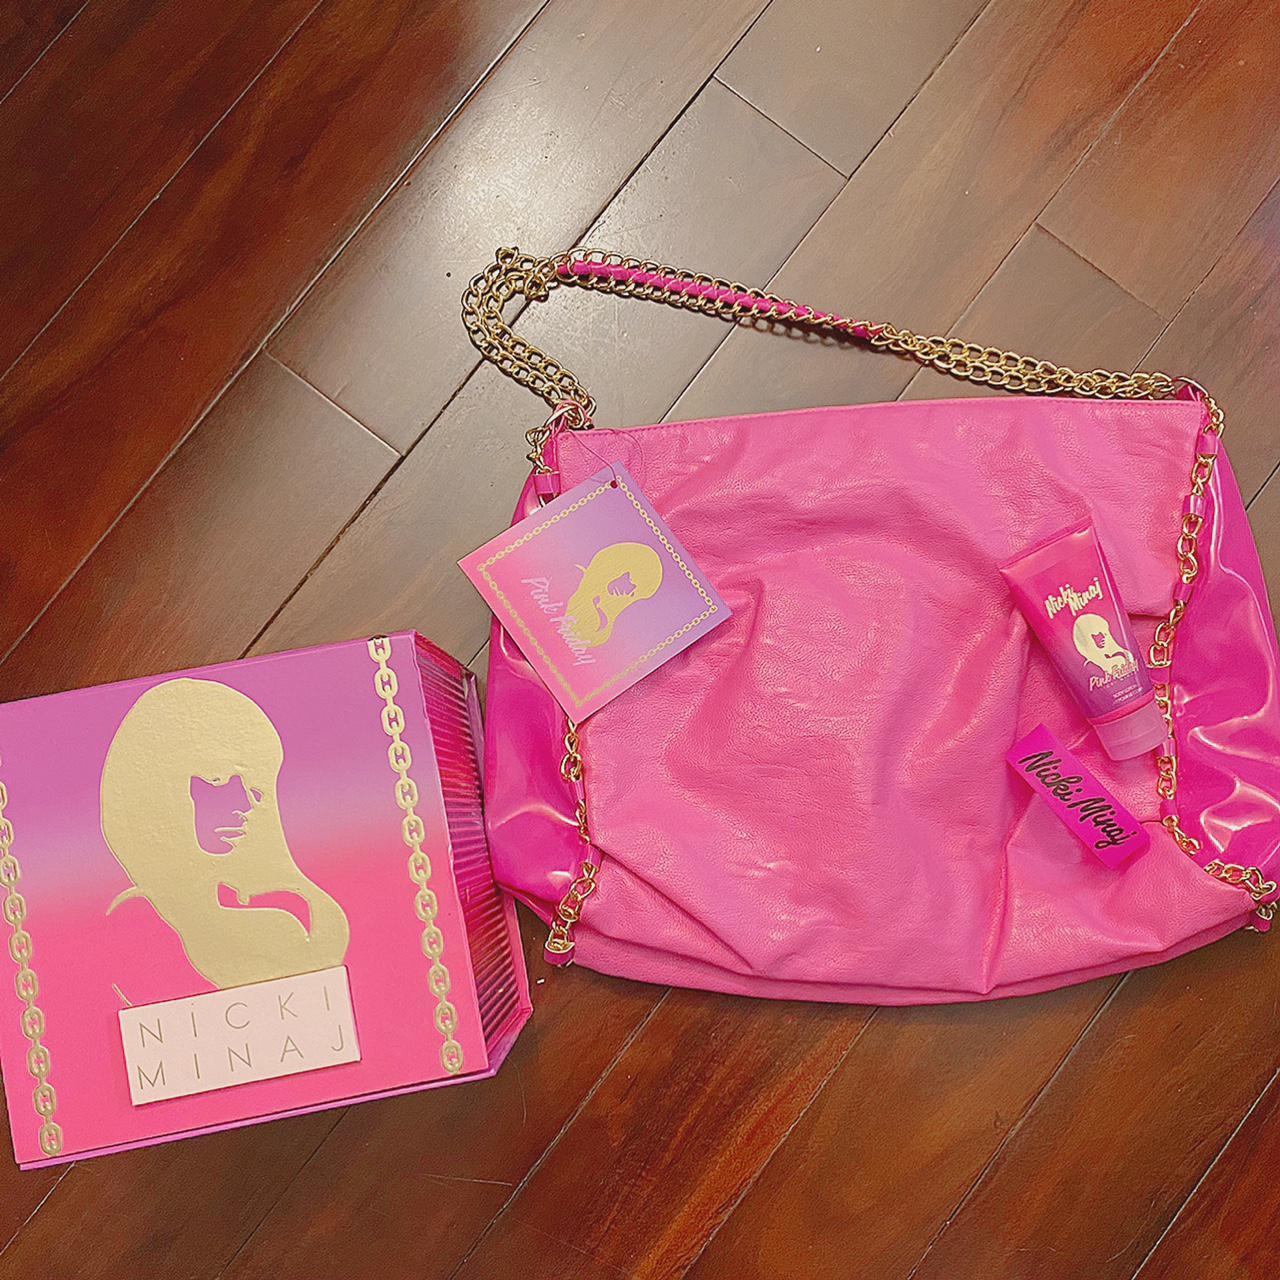 nicki minaj pink friday tote bag, perfume set with 2 - Depop